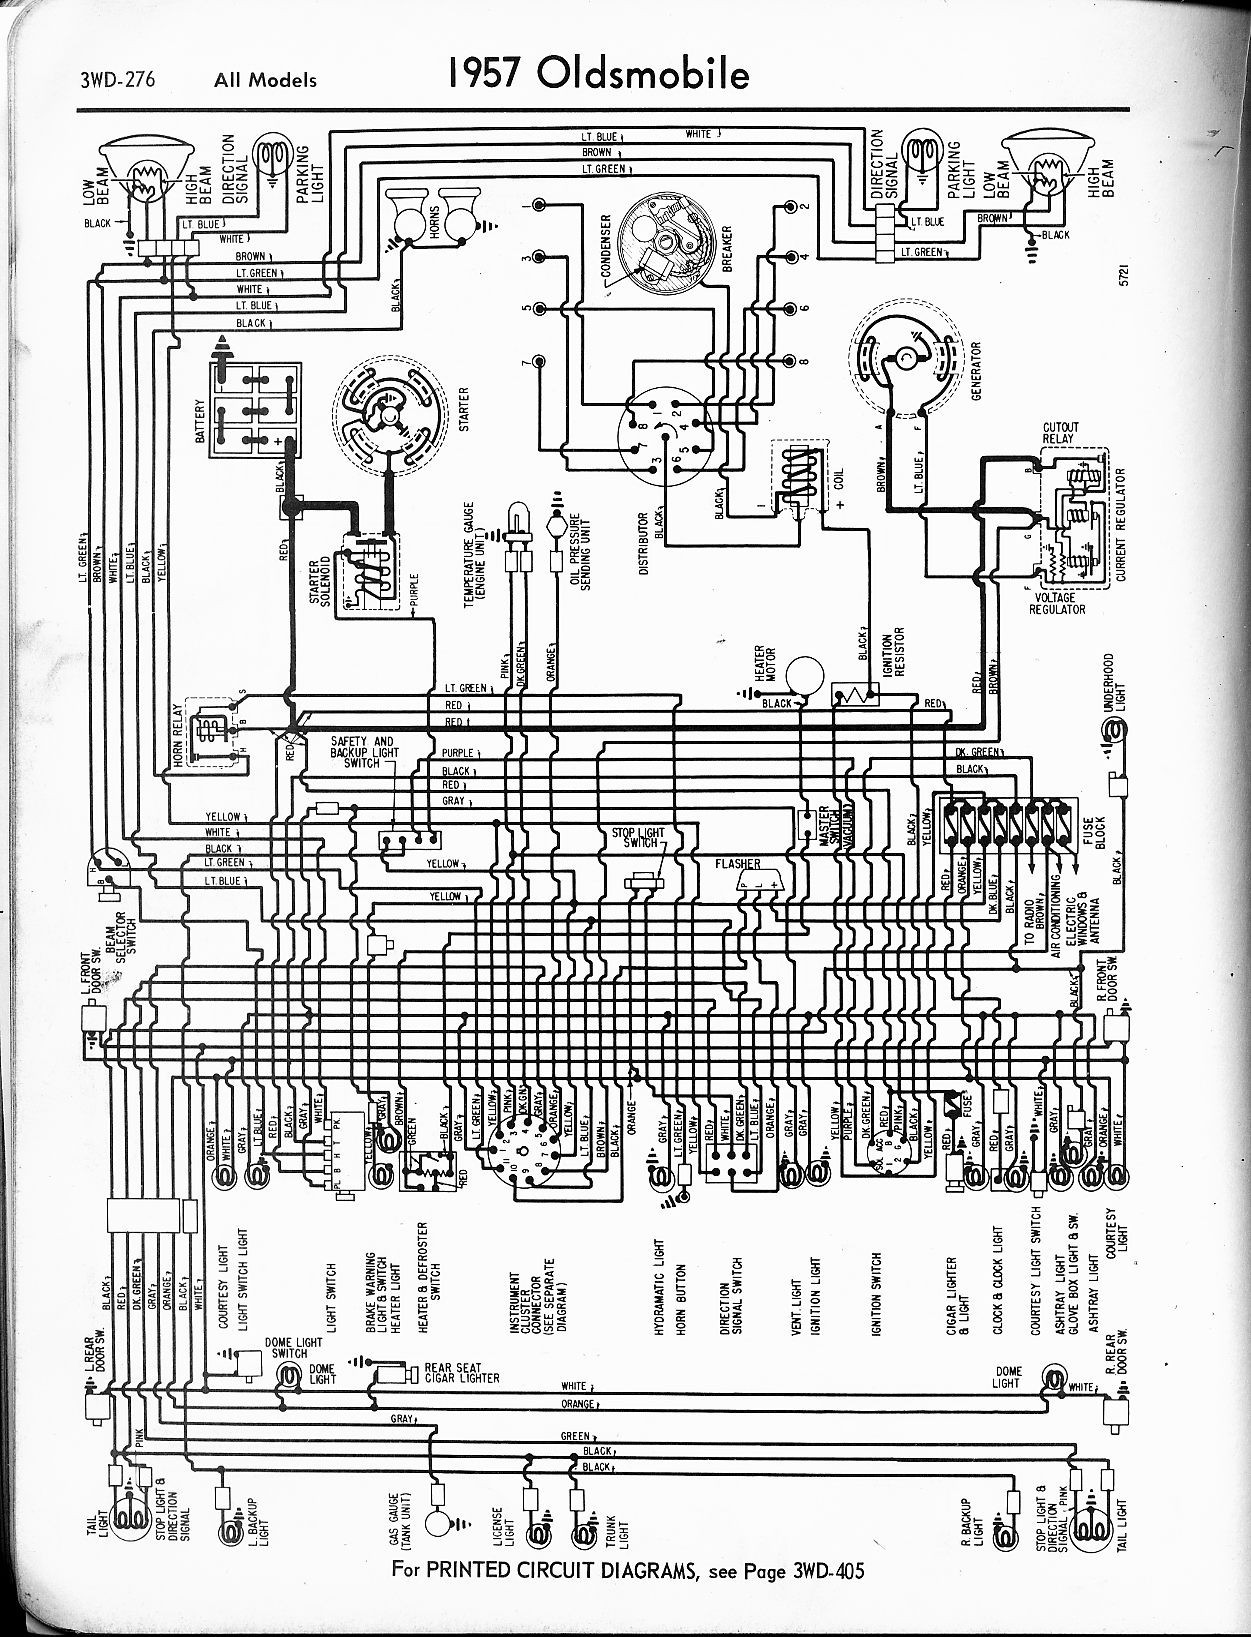 3400 Sfi Engine Diagram Diagram A 3 3 Olds Engine Schematics Data Wiring Diagrams • Of 3400 Sfi Engine Diagram